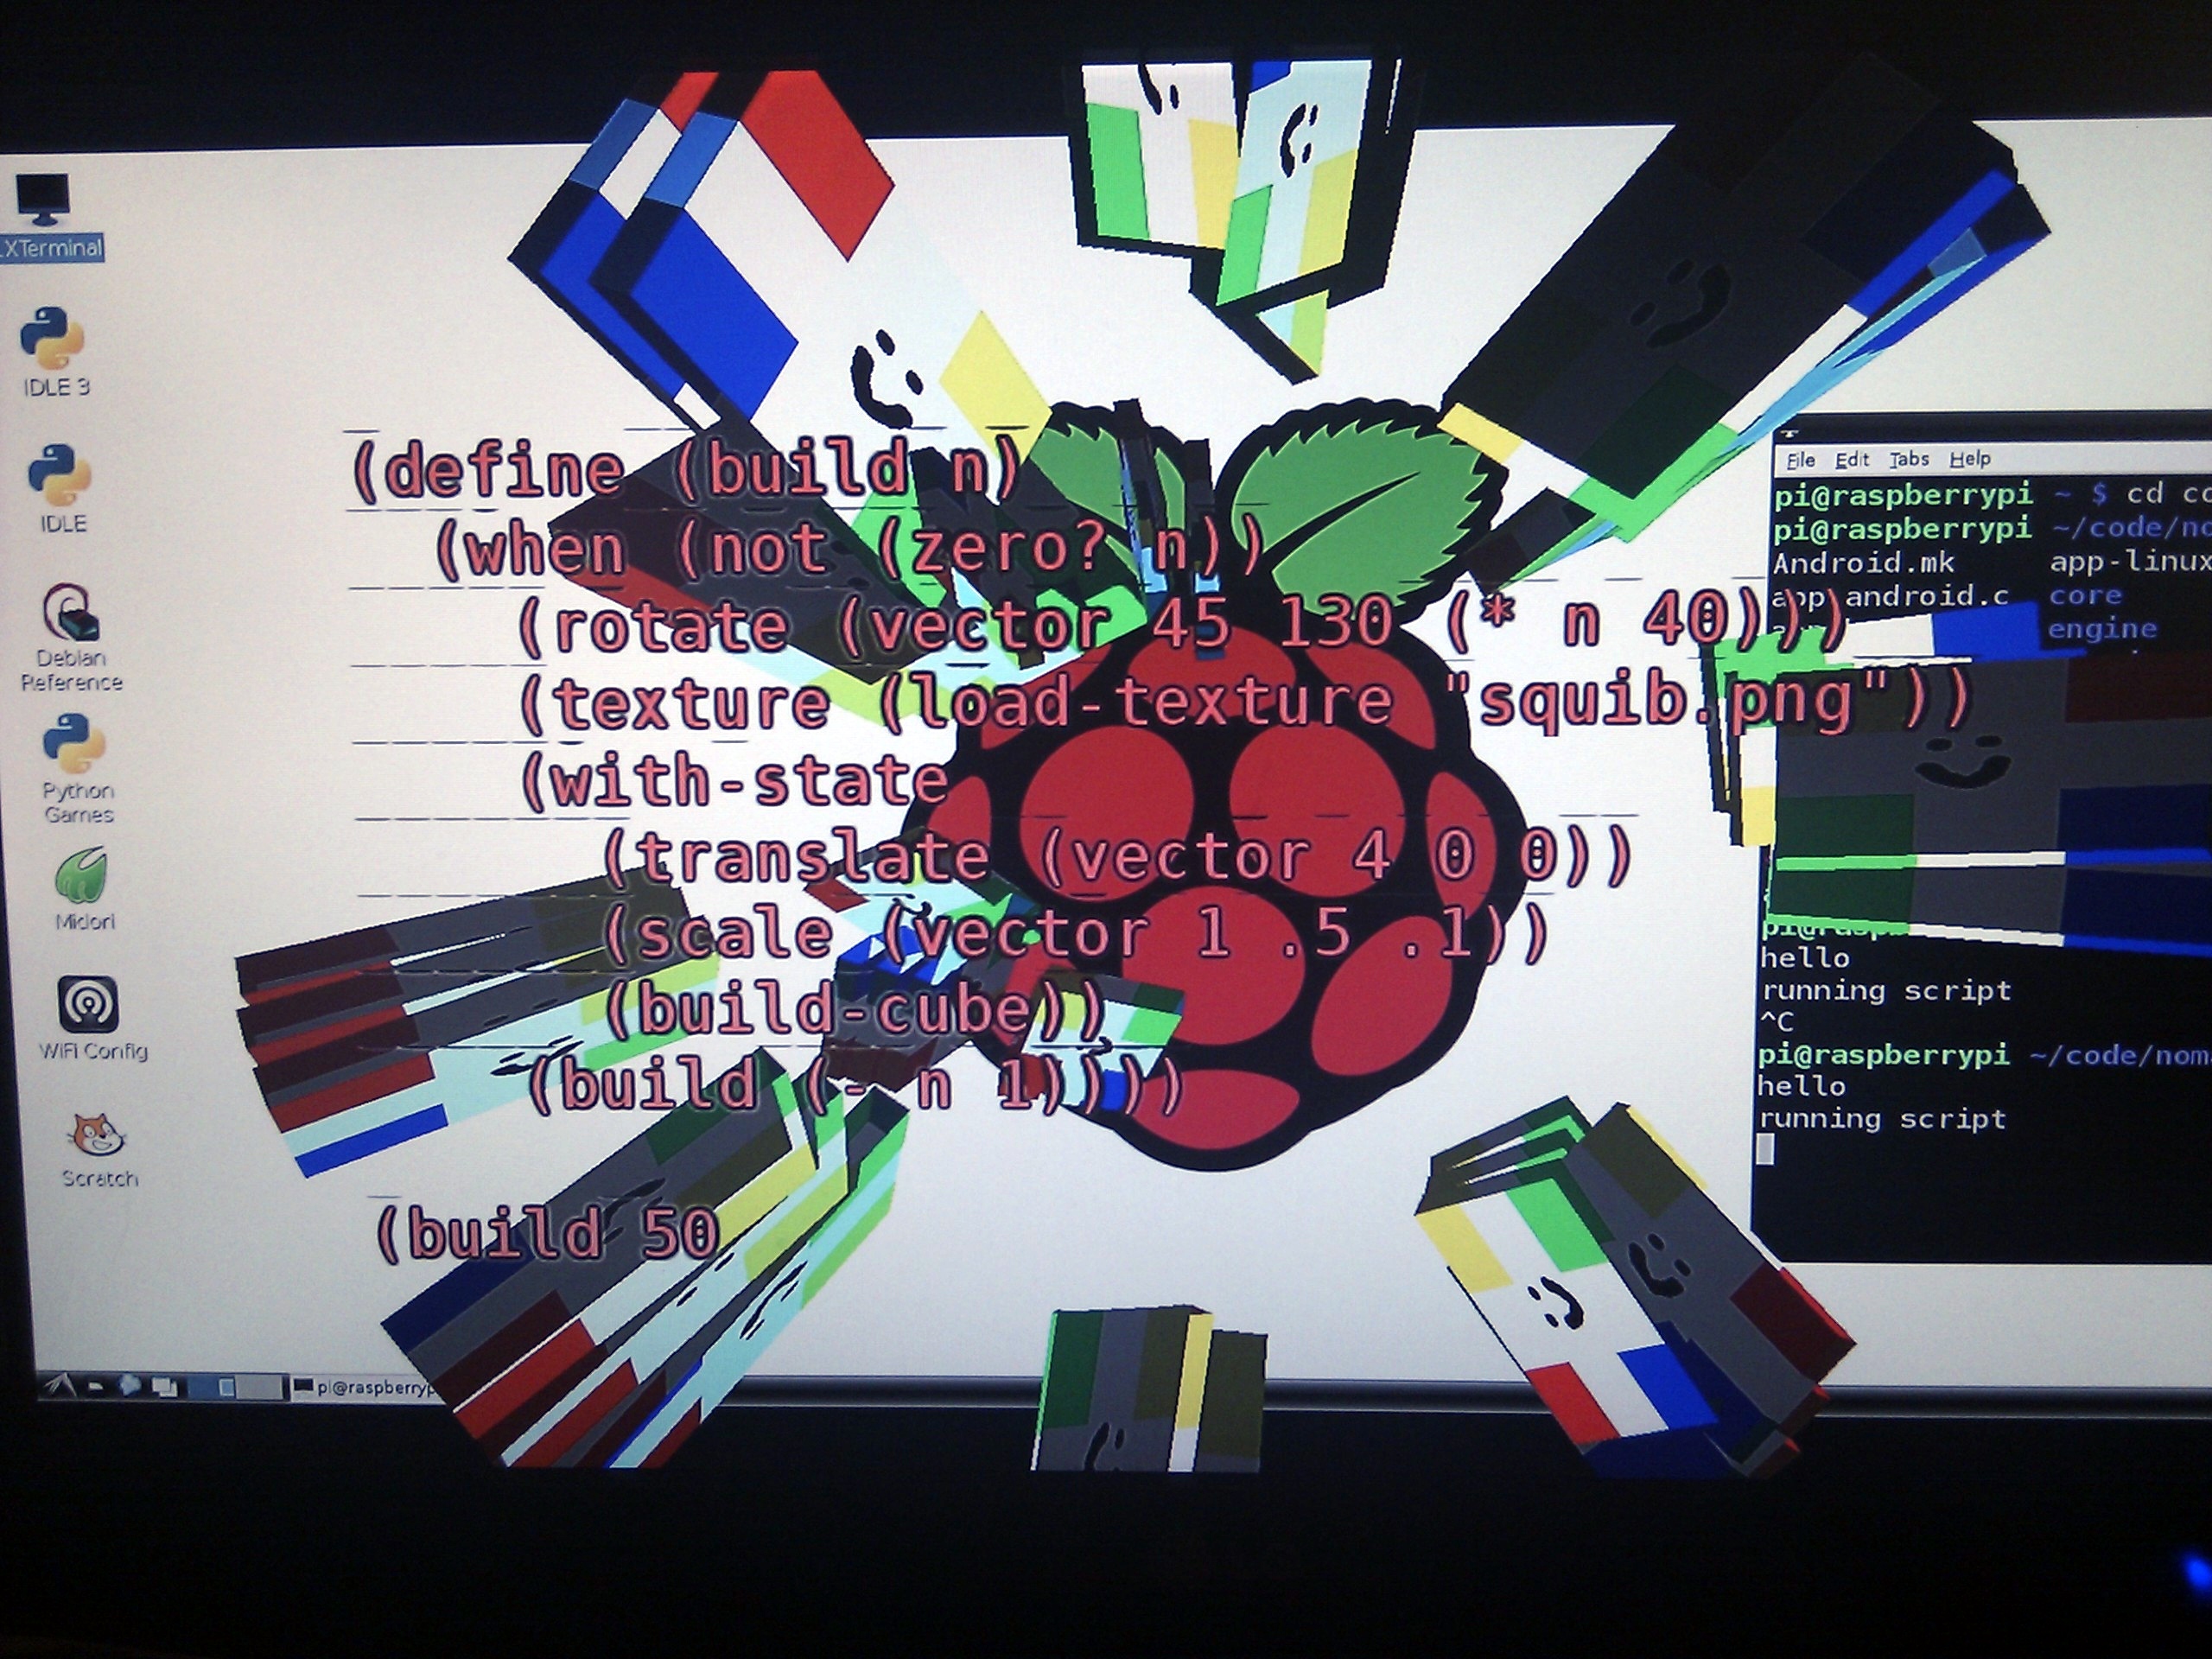 Live coding on the Raspberry Pi